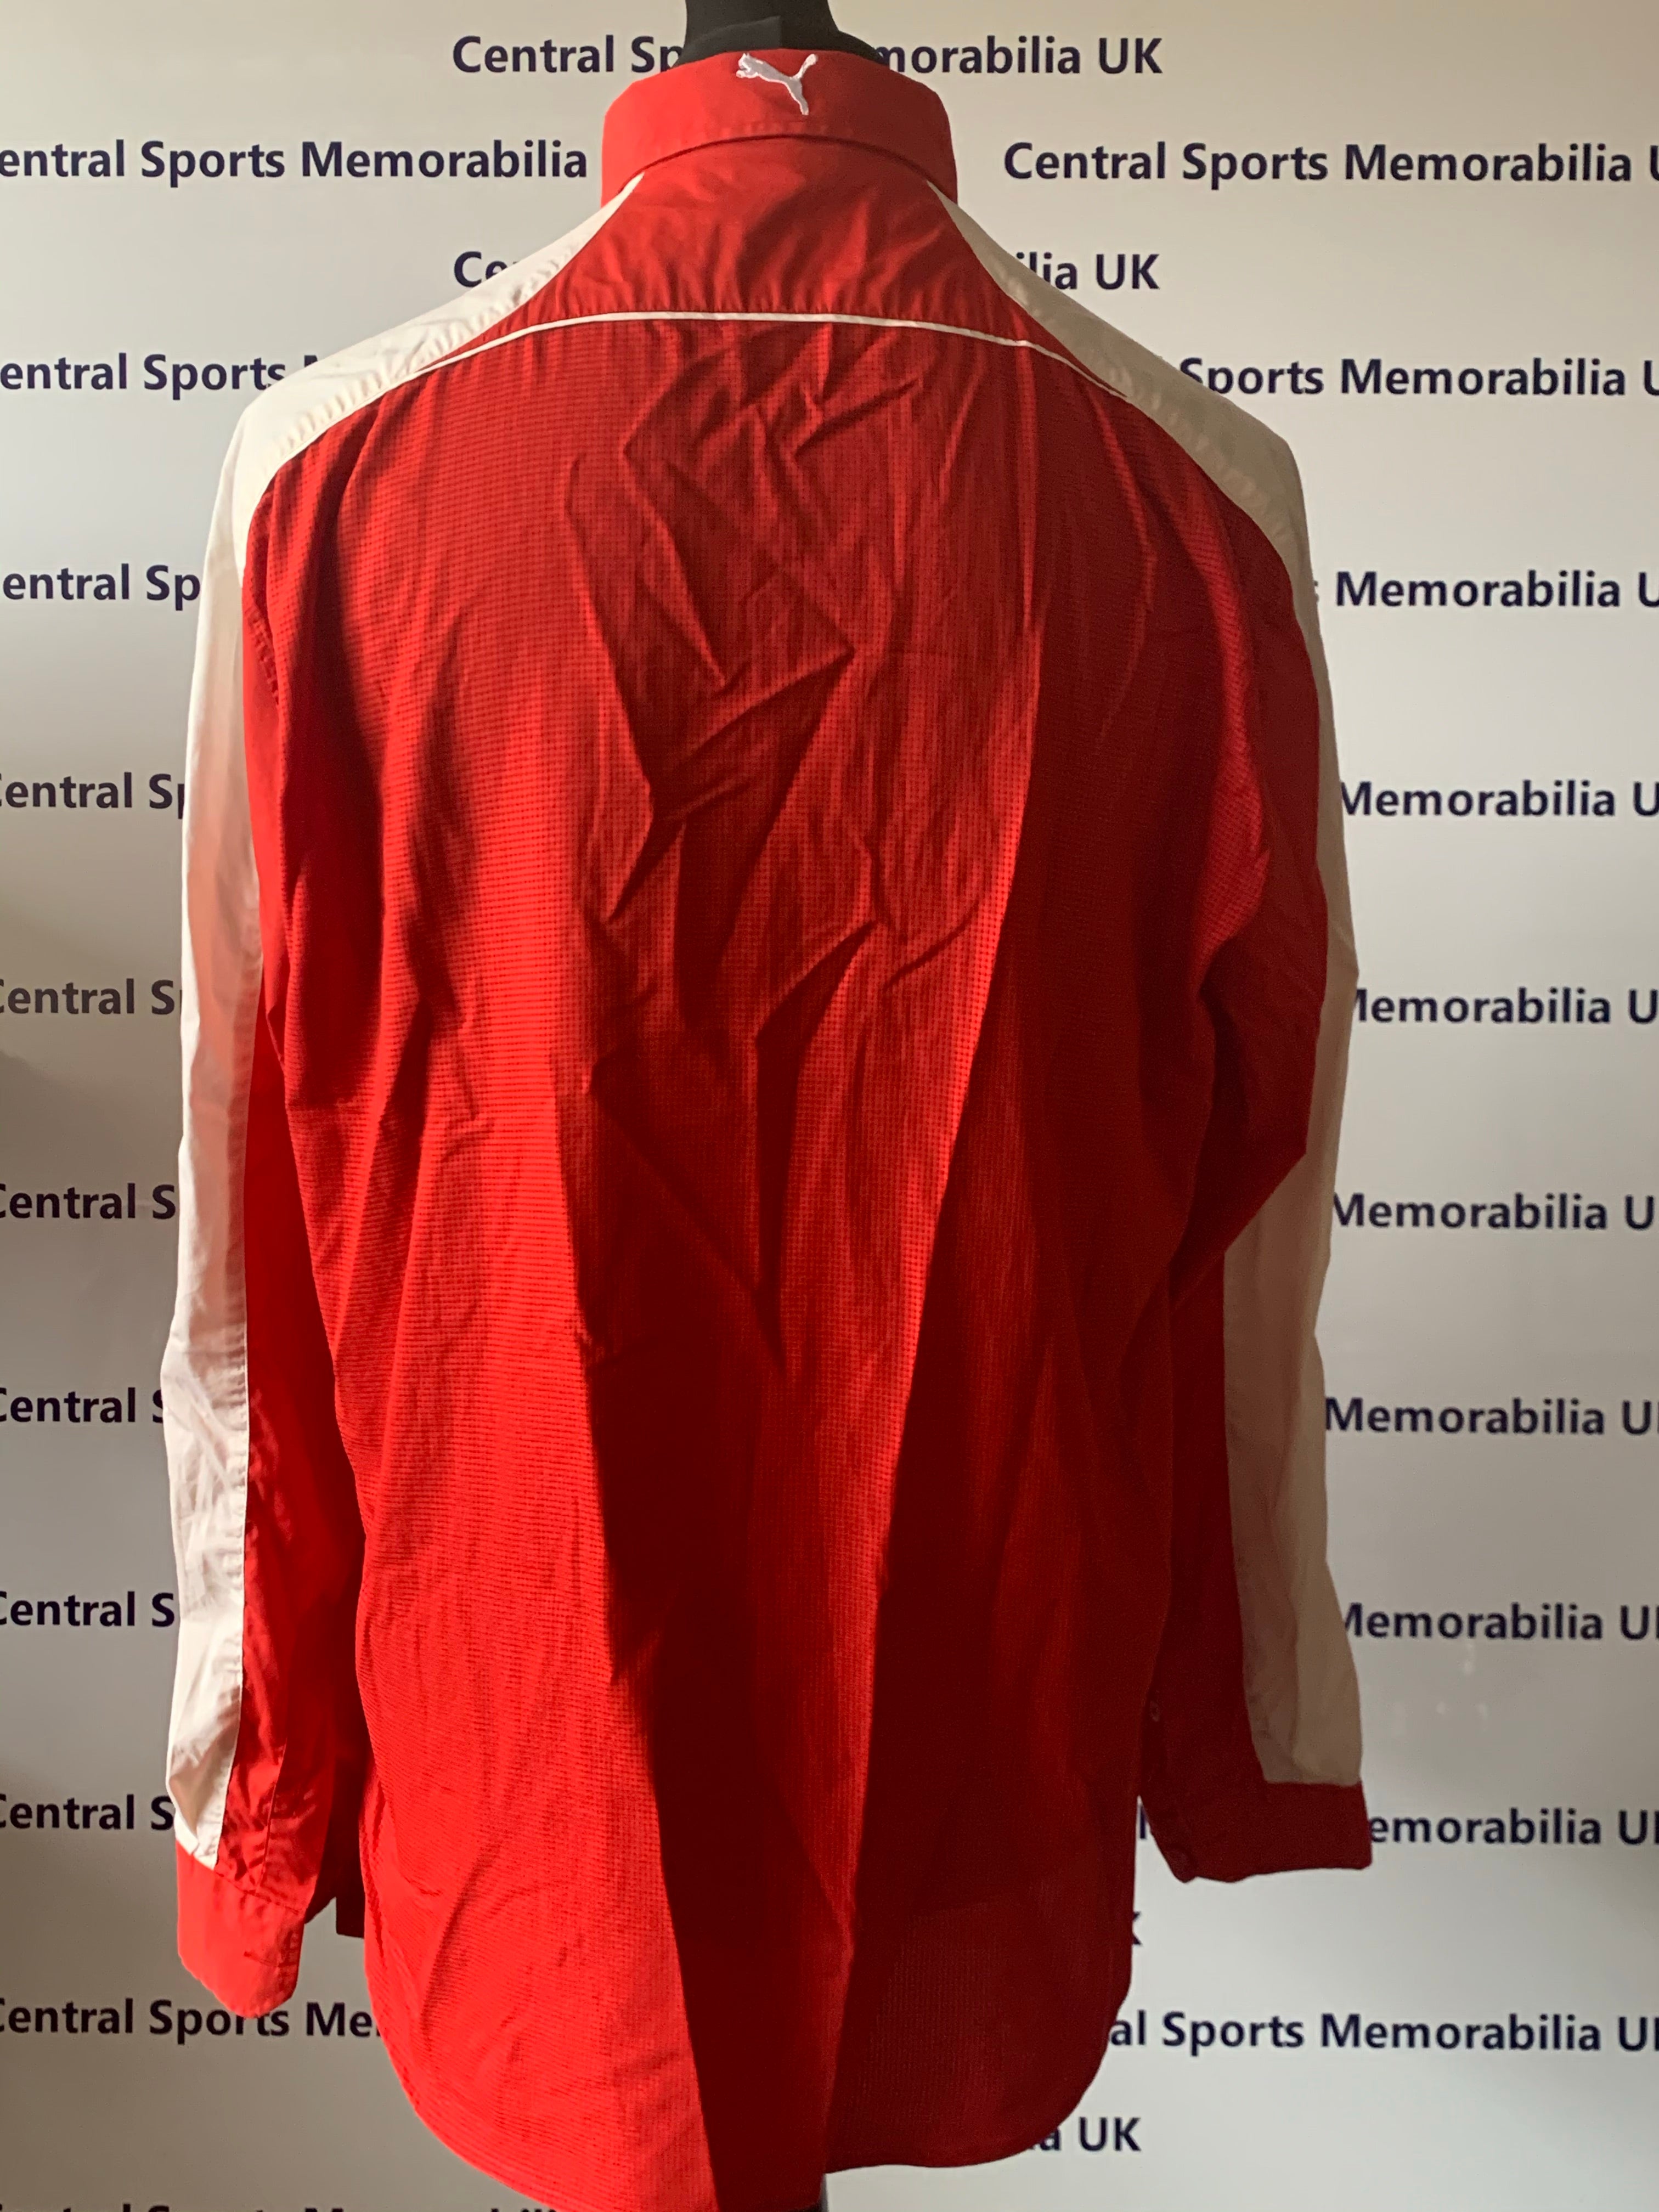 Ferrari 2009 Teamwear - Long sleeve shirt